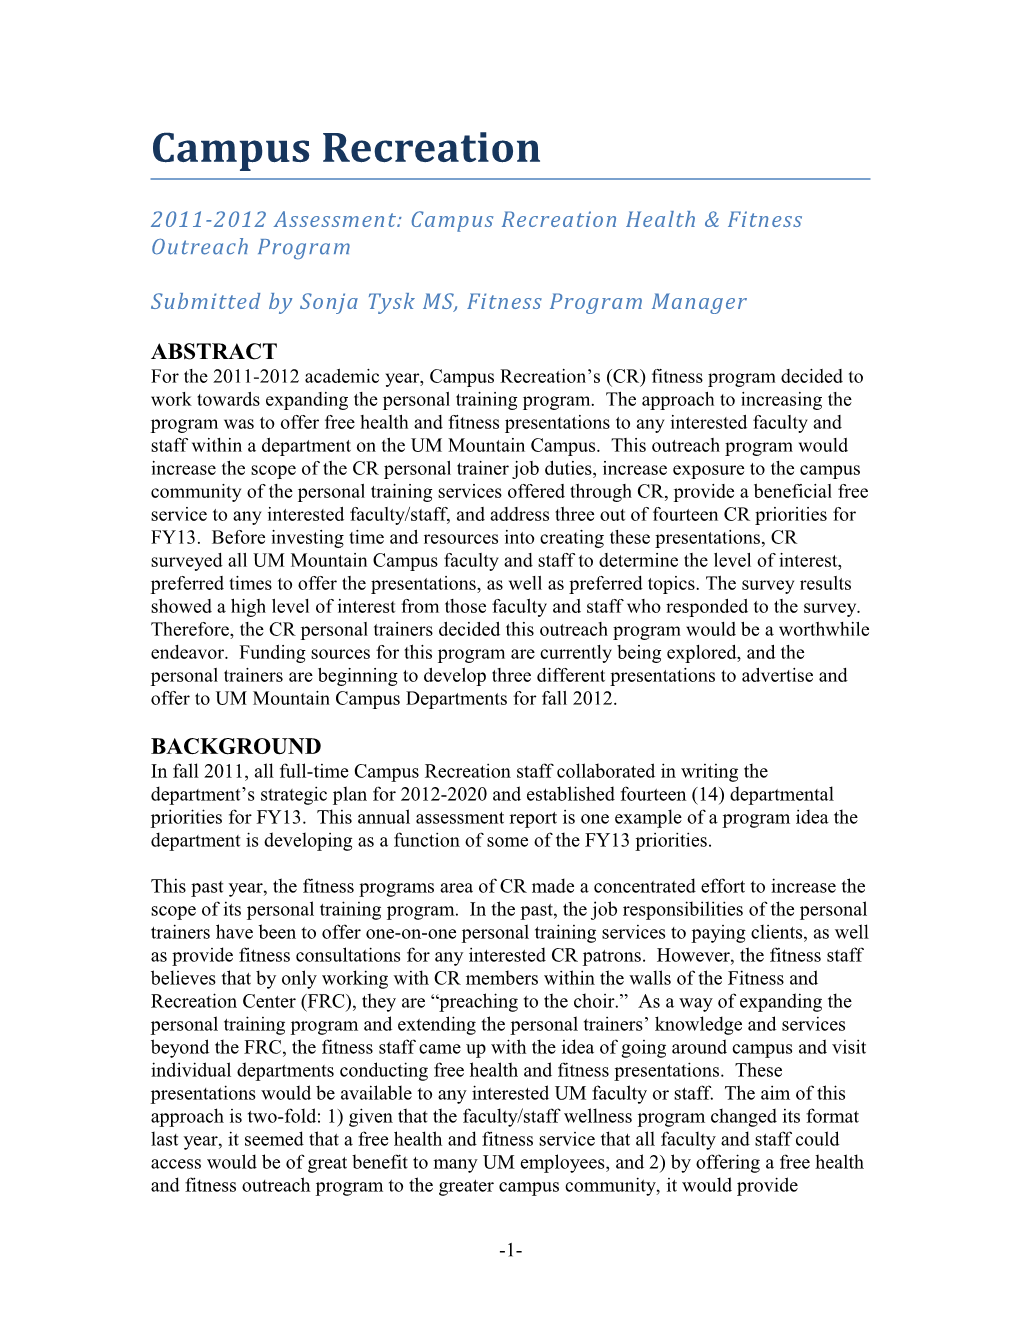 2011-2012 Assessment: Campus Recreation Health & Fitness Outreach Program